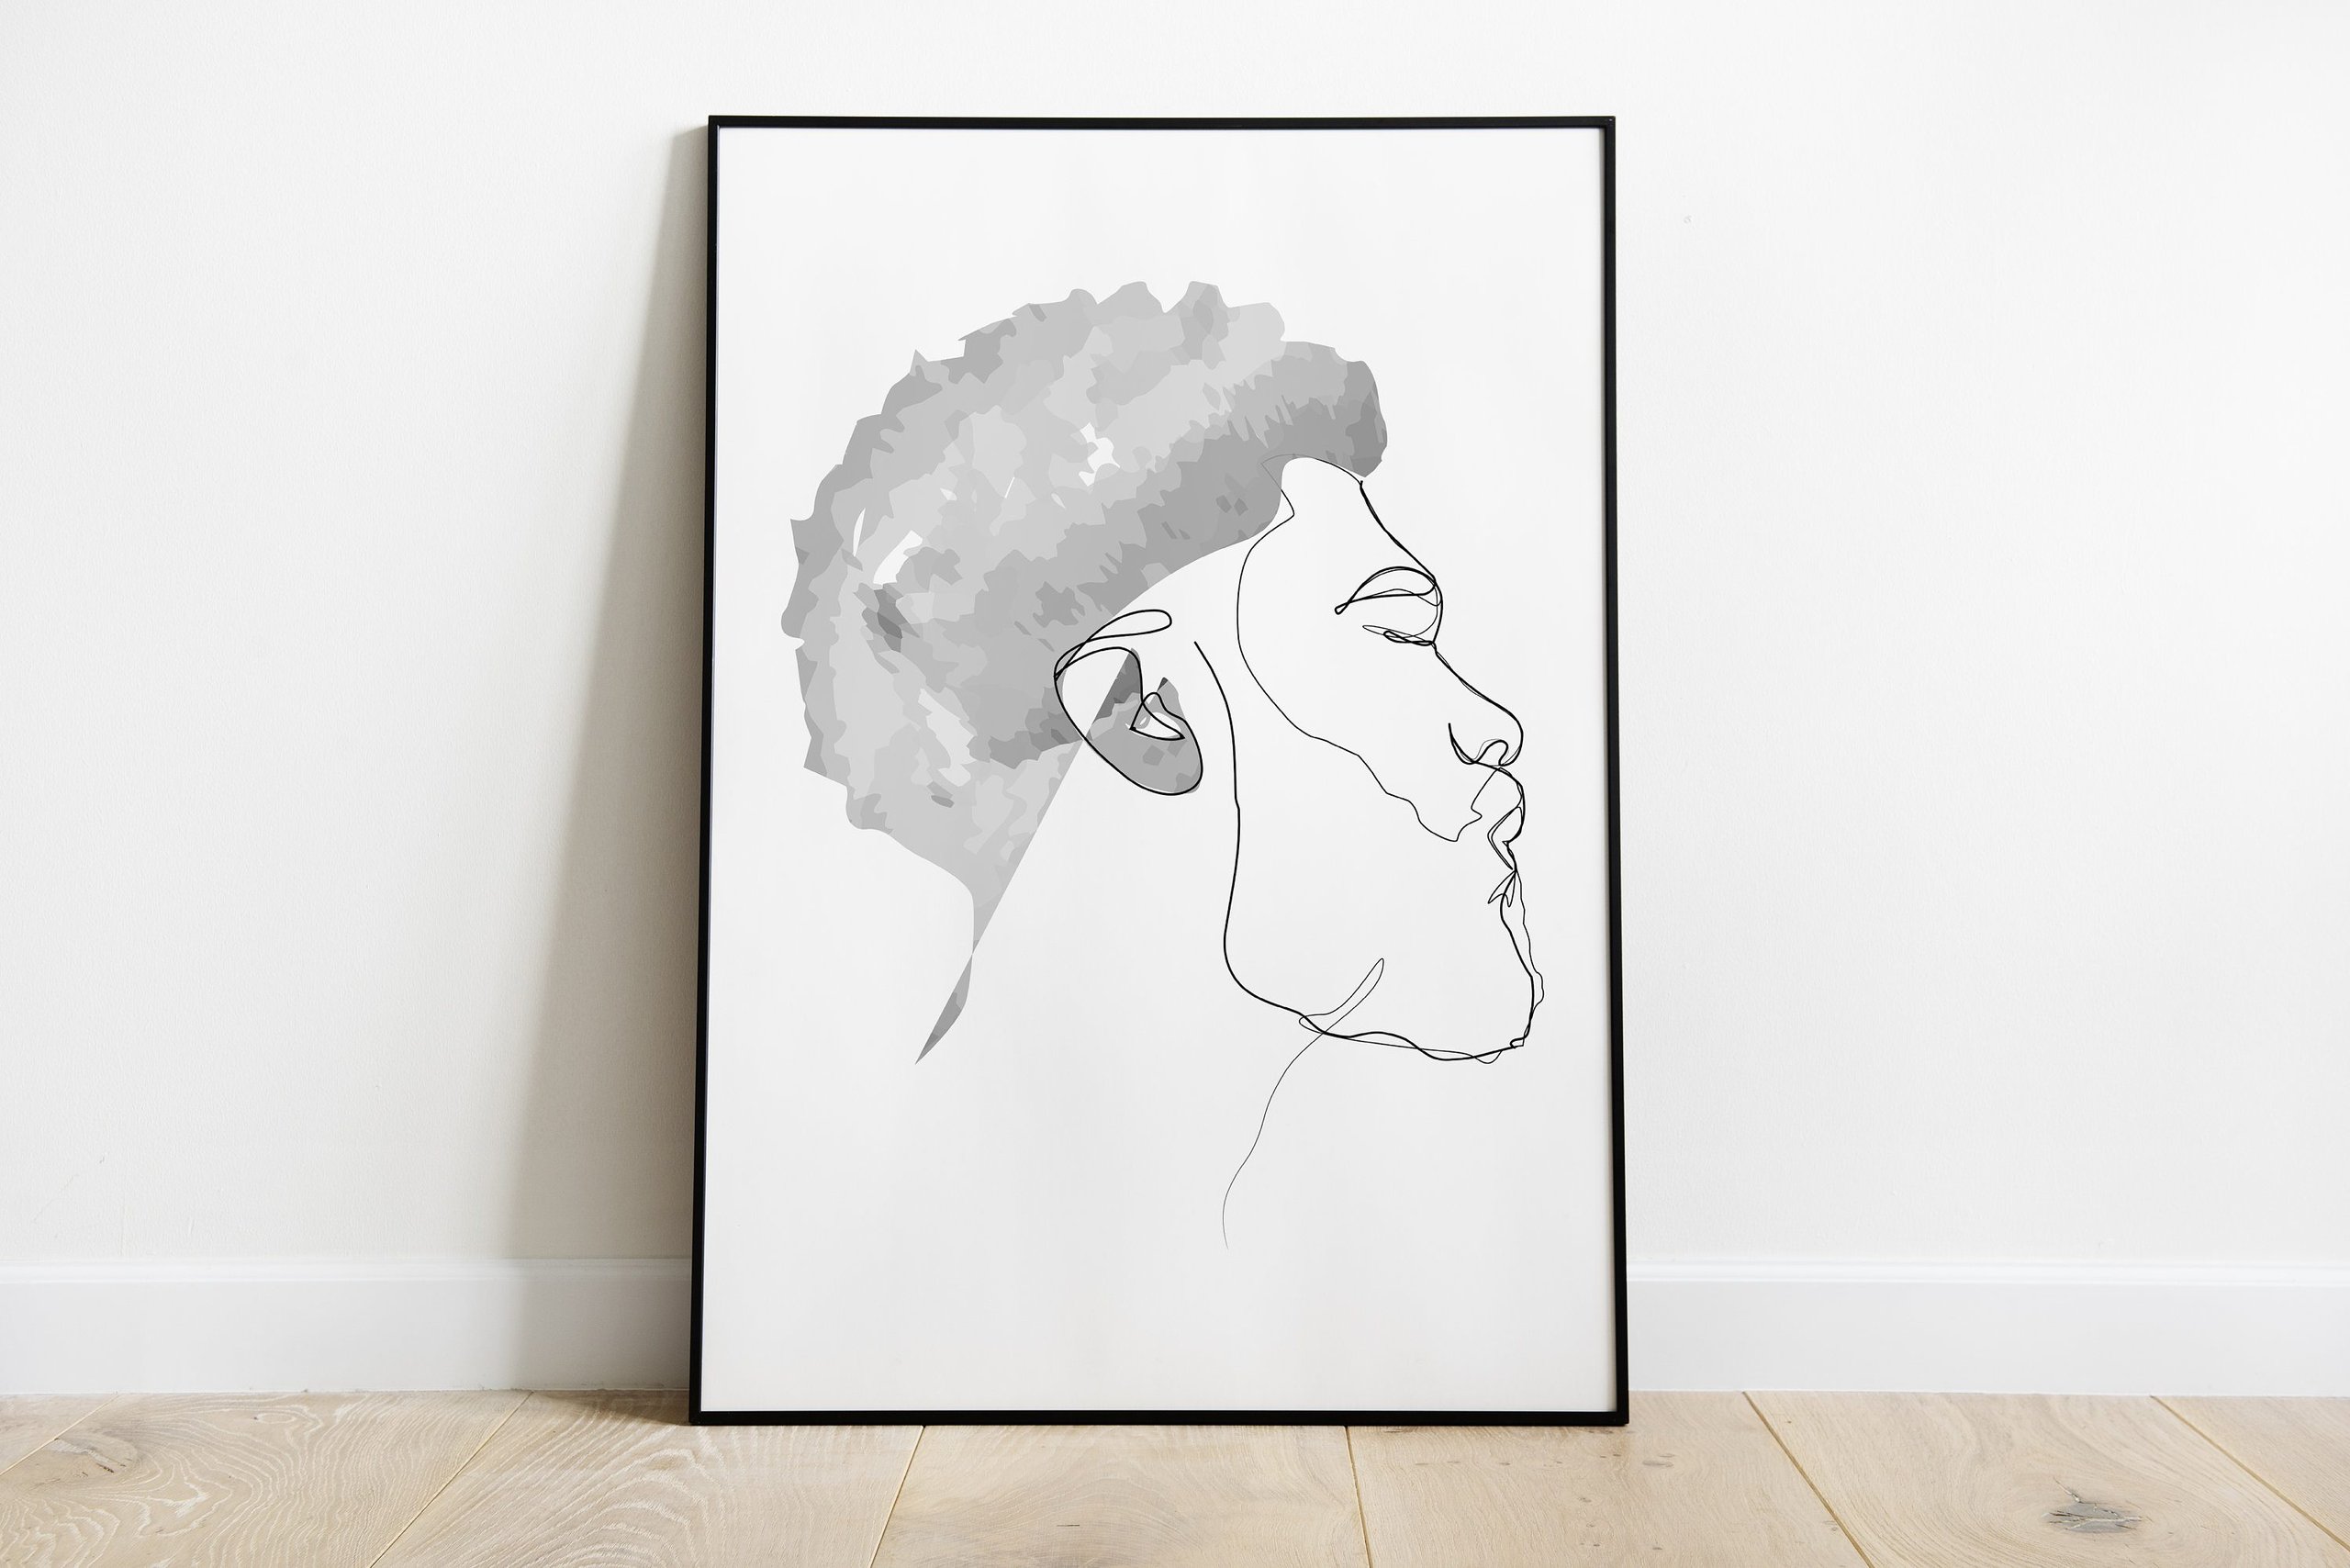 Afro Hair Black Man Line Art Print